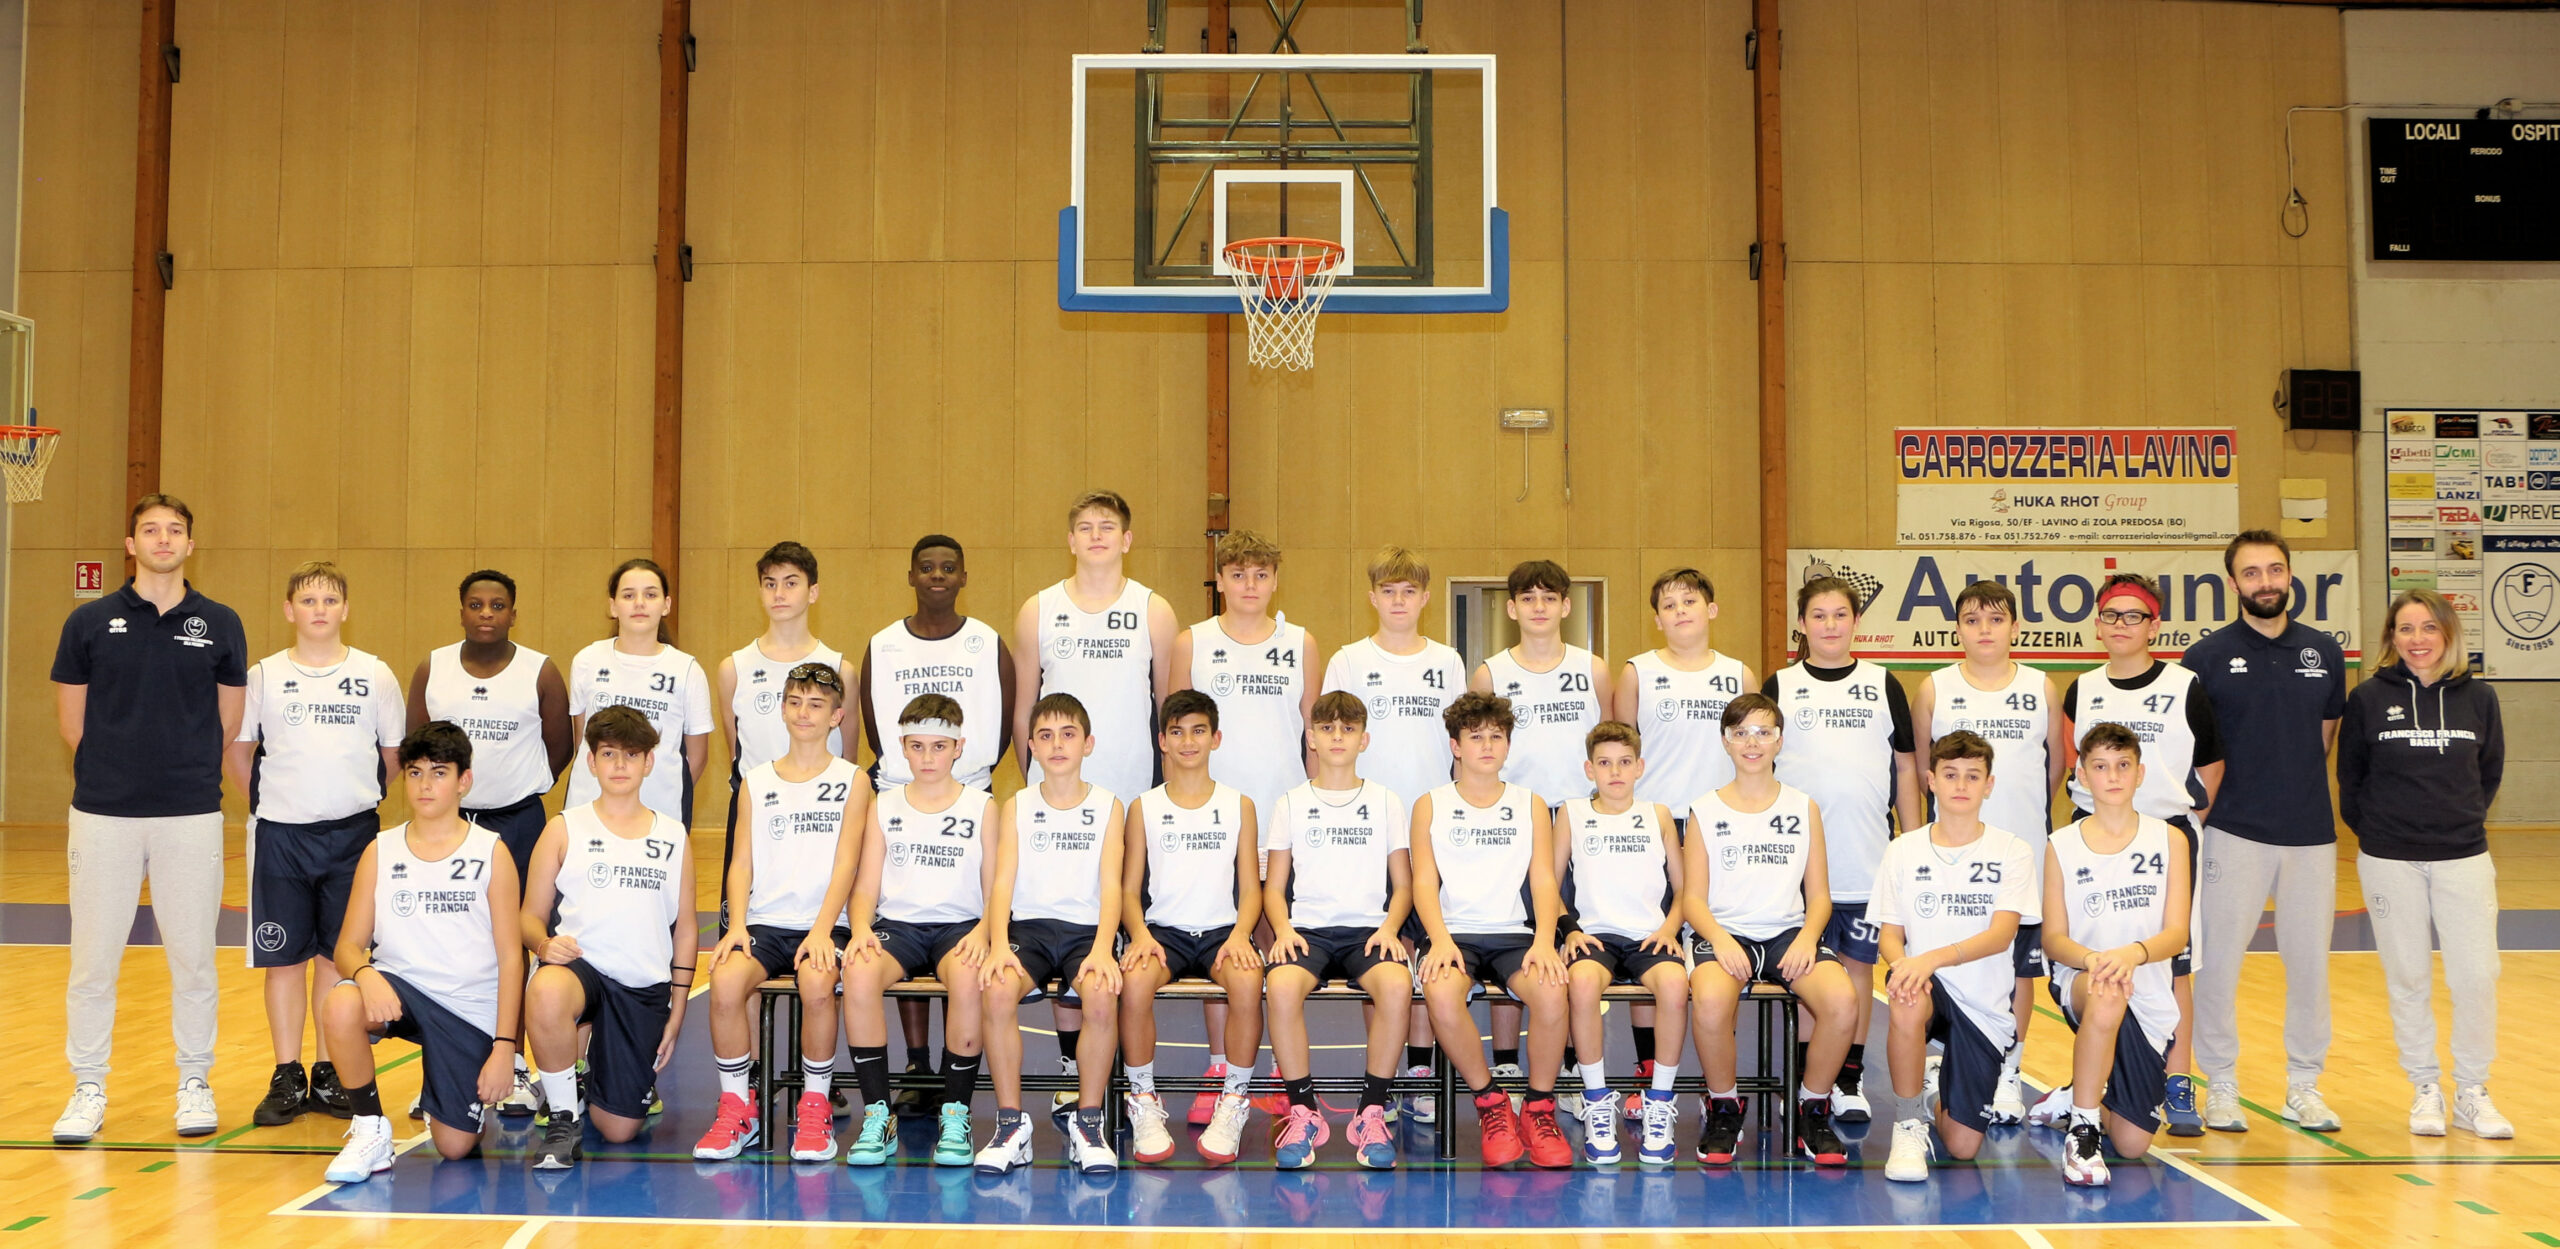 Squadra Under13 Silver - Francesco Francia Basket